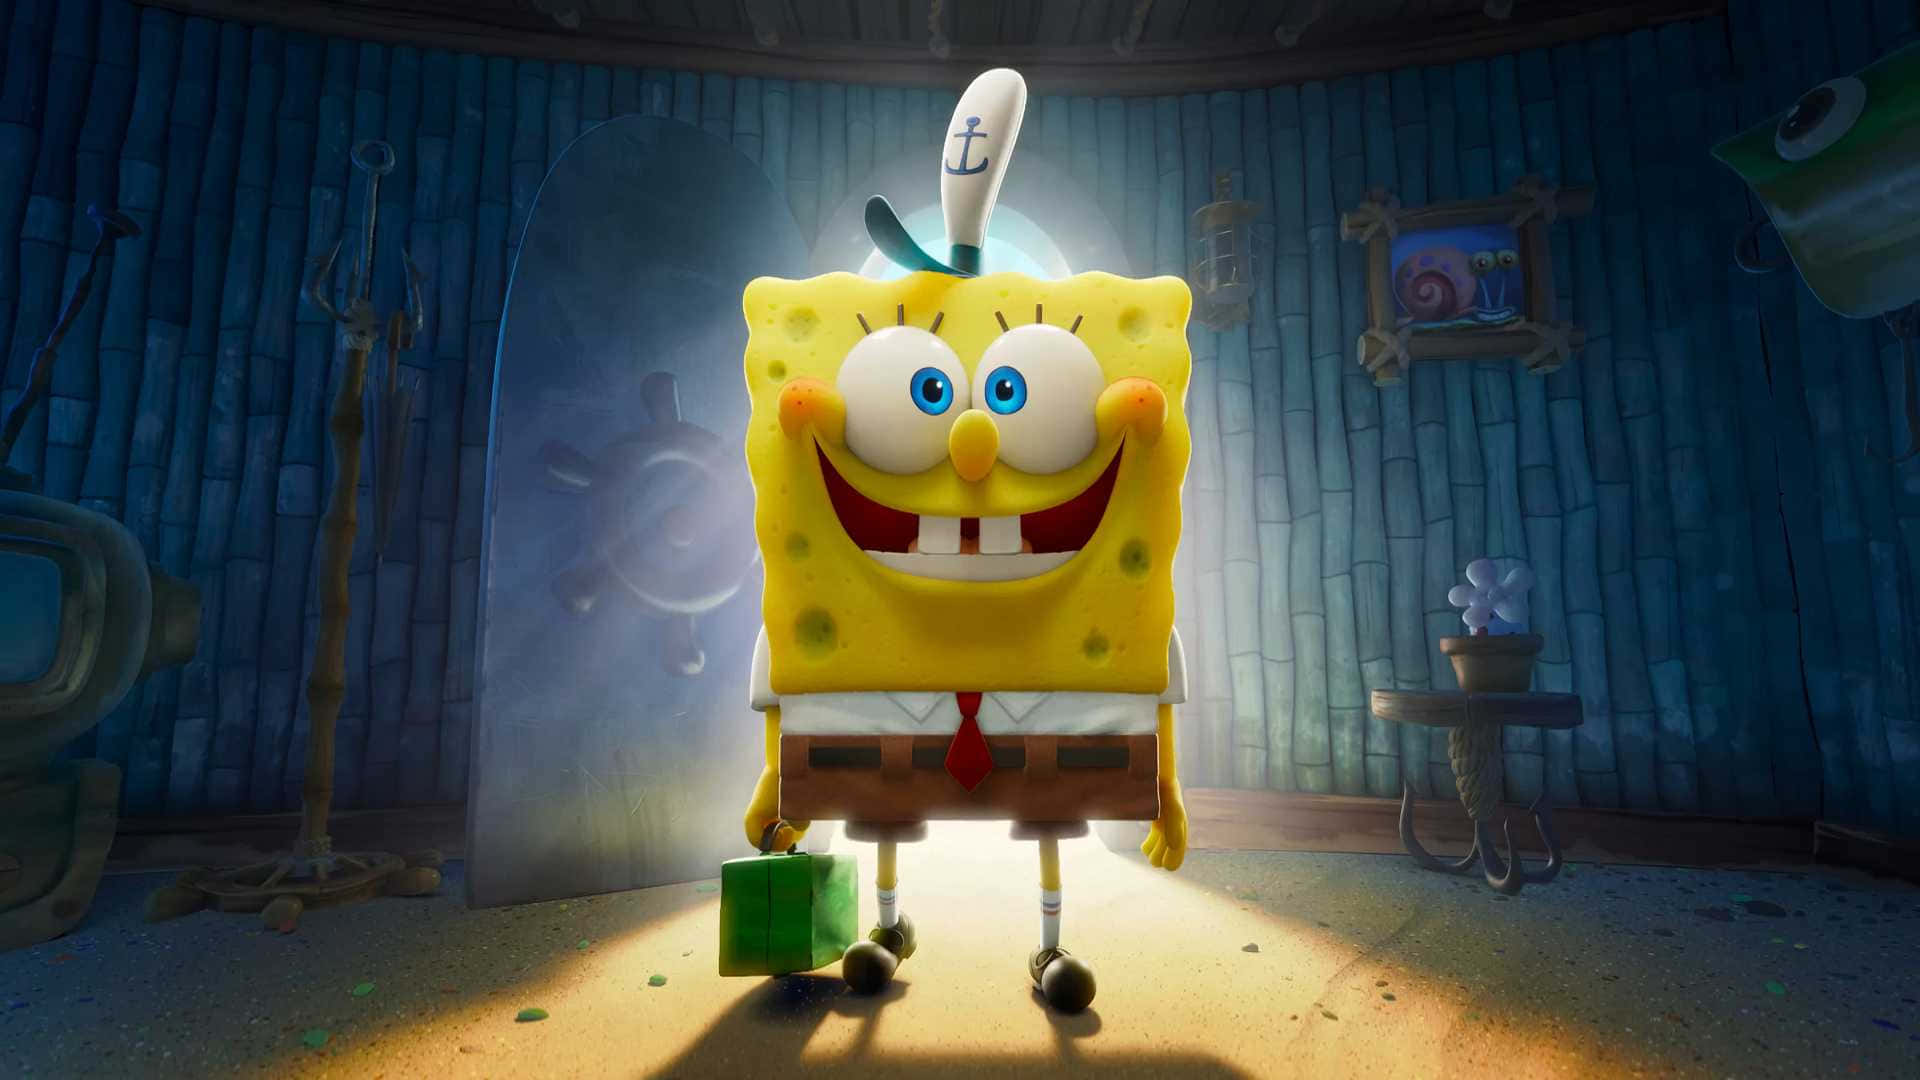 Spongebob Squarepants The Movie Wallpaper